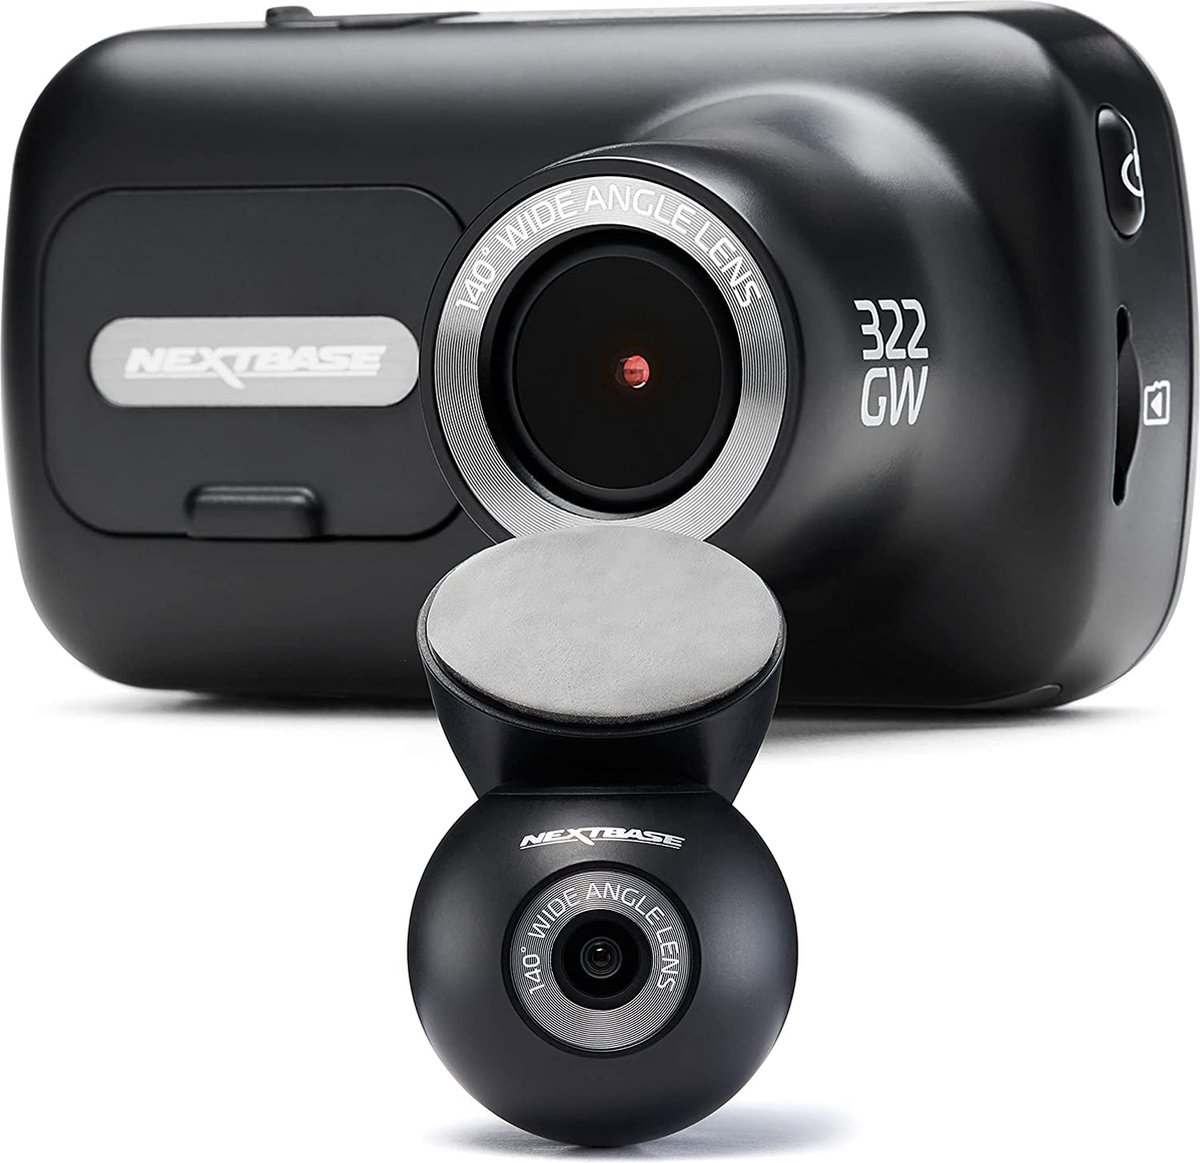 Nextbase 322GW en Rearwindow dashcam voor auto voor en achter - wifi - Auto camera - GPS - SOS functie